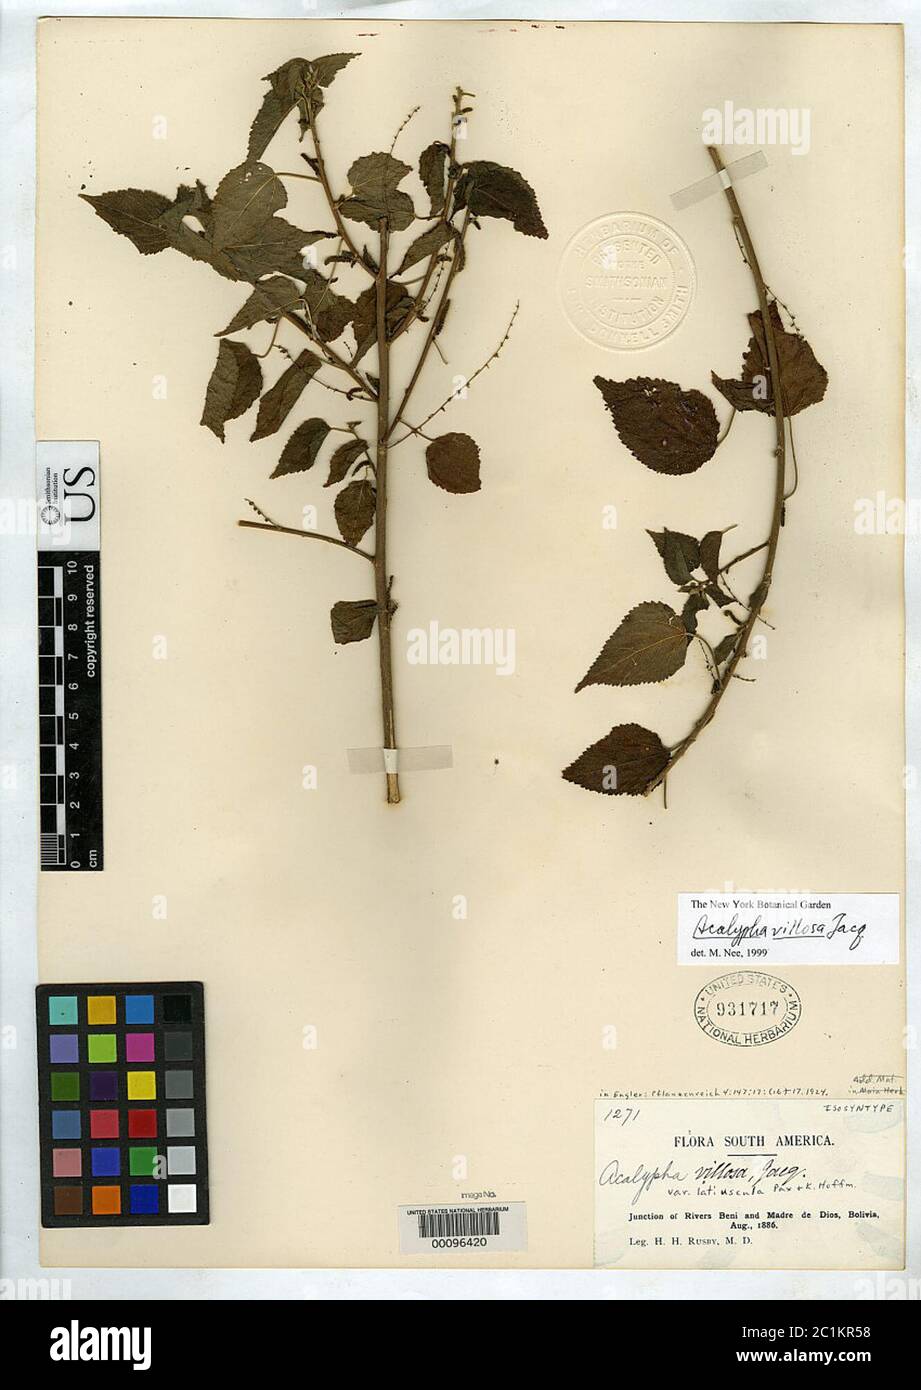 Acalypha villosa var latiuscula Pax K Hoffm in Engl Acalypha villosa var latiuscula Pax K Hoffm in Engl. Stock Photo